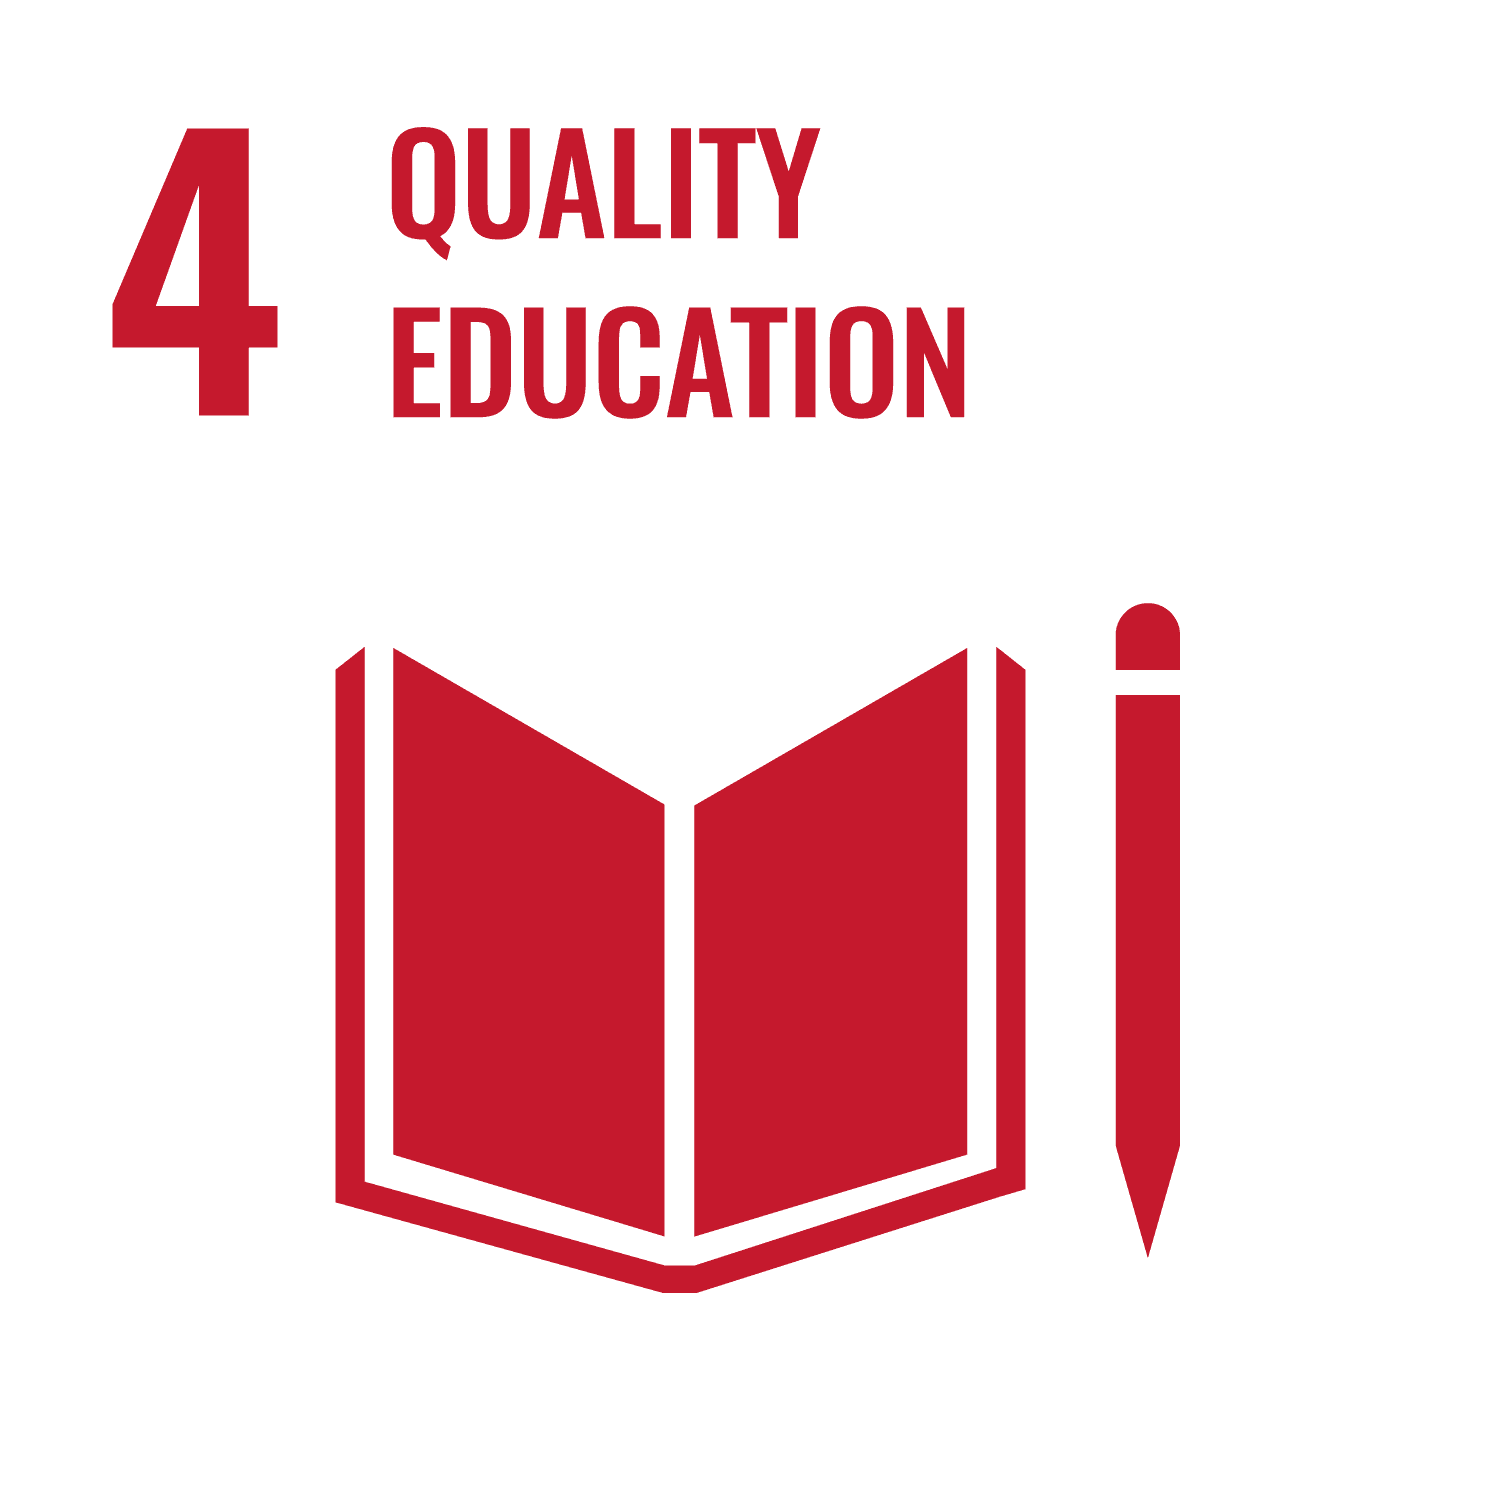 Goal 4, Quality Education